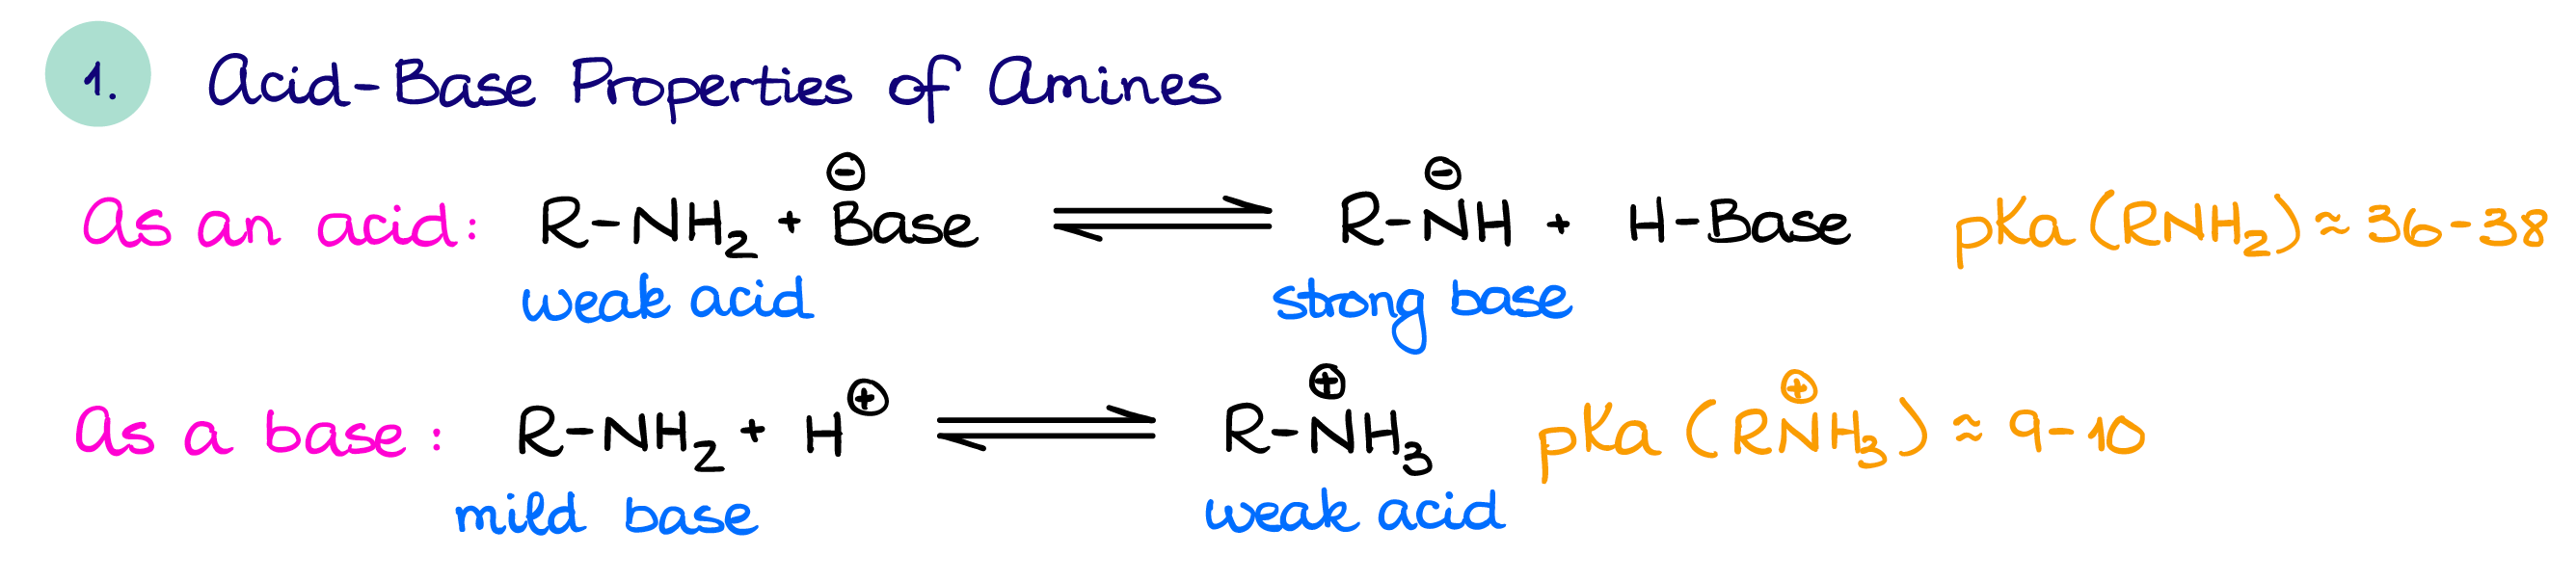 acid-base properties of amines